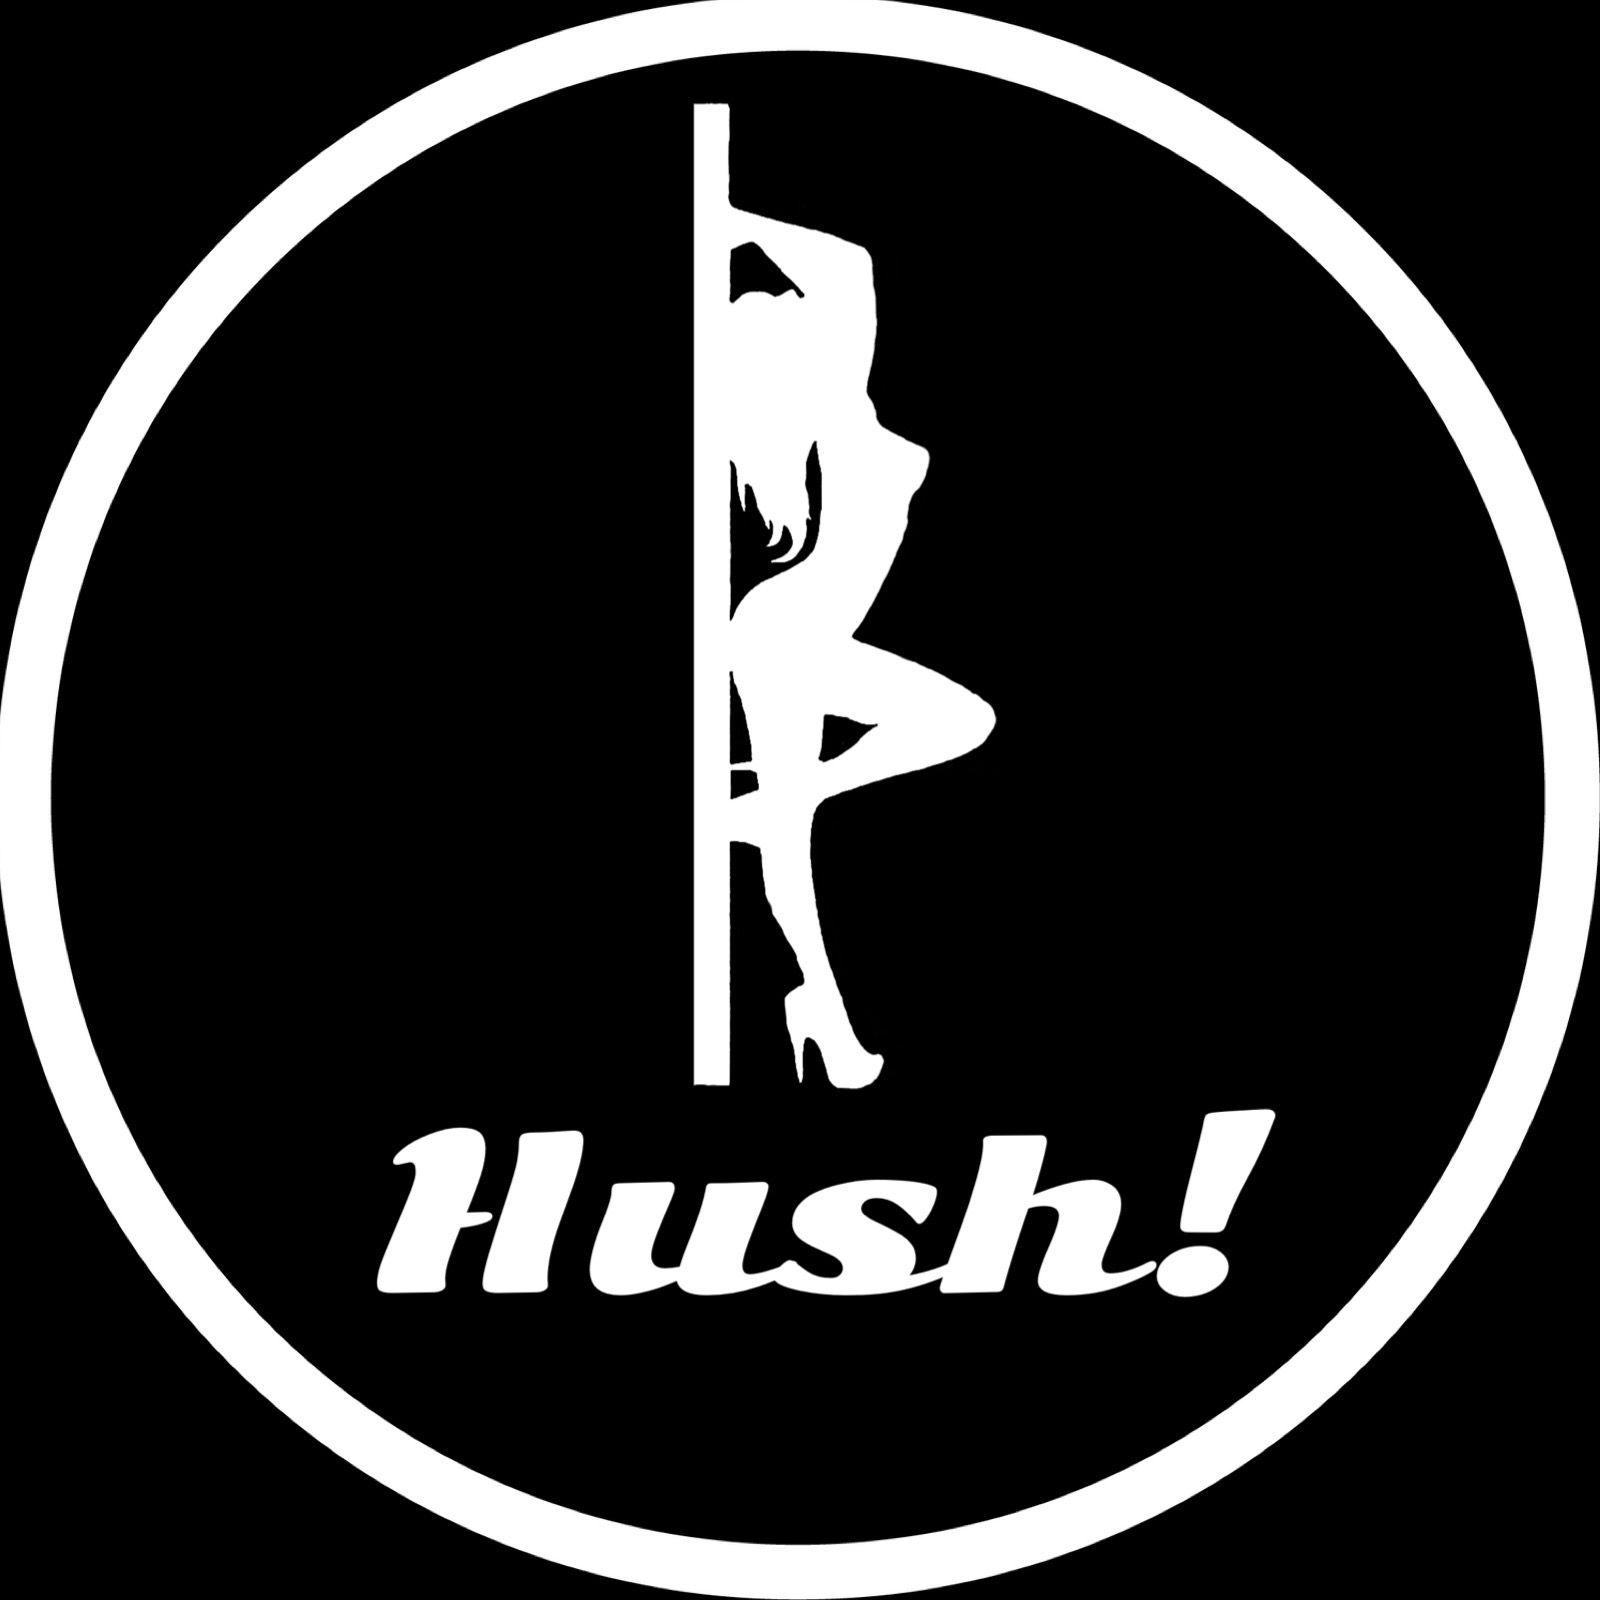 Hush! - Hush! Vol. 50- The Taboo Talk (STD awareness)